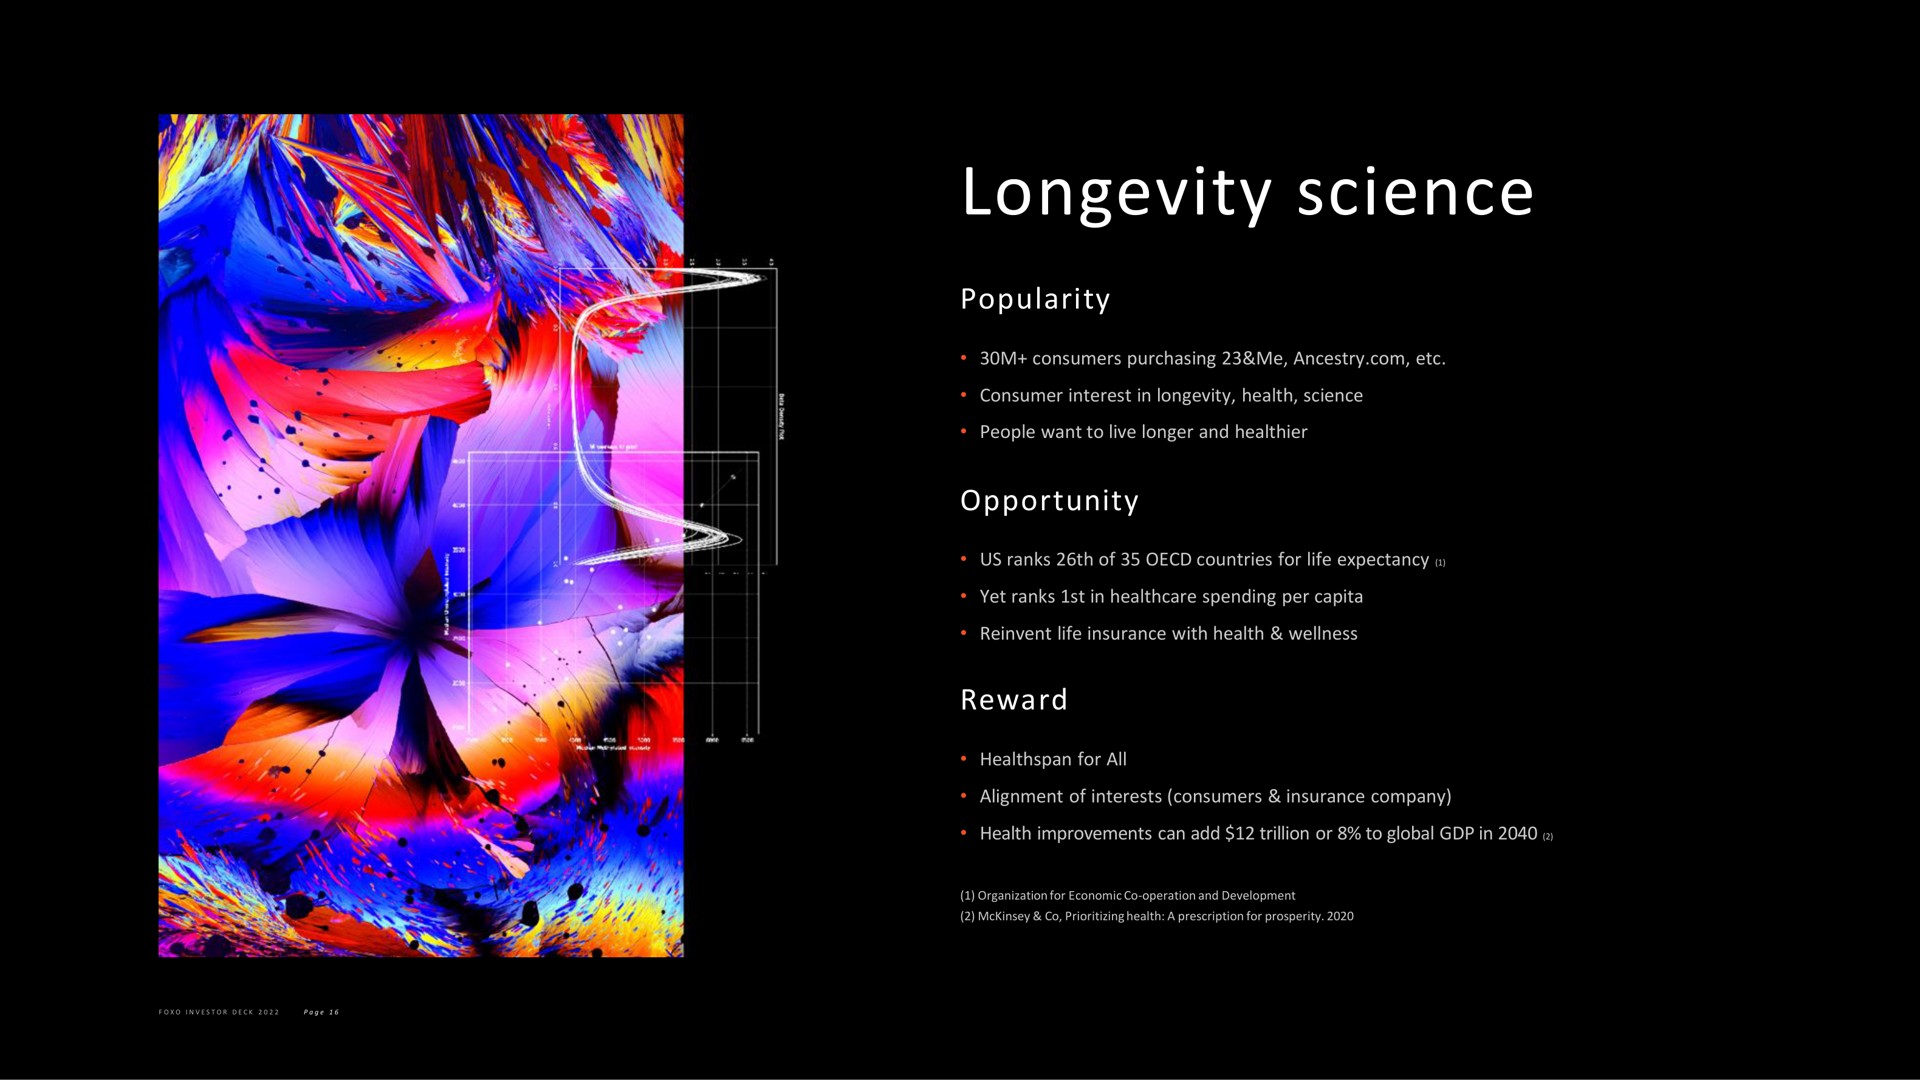 longevity science popularity opportunity reward | Foxo